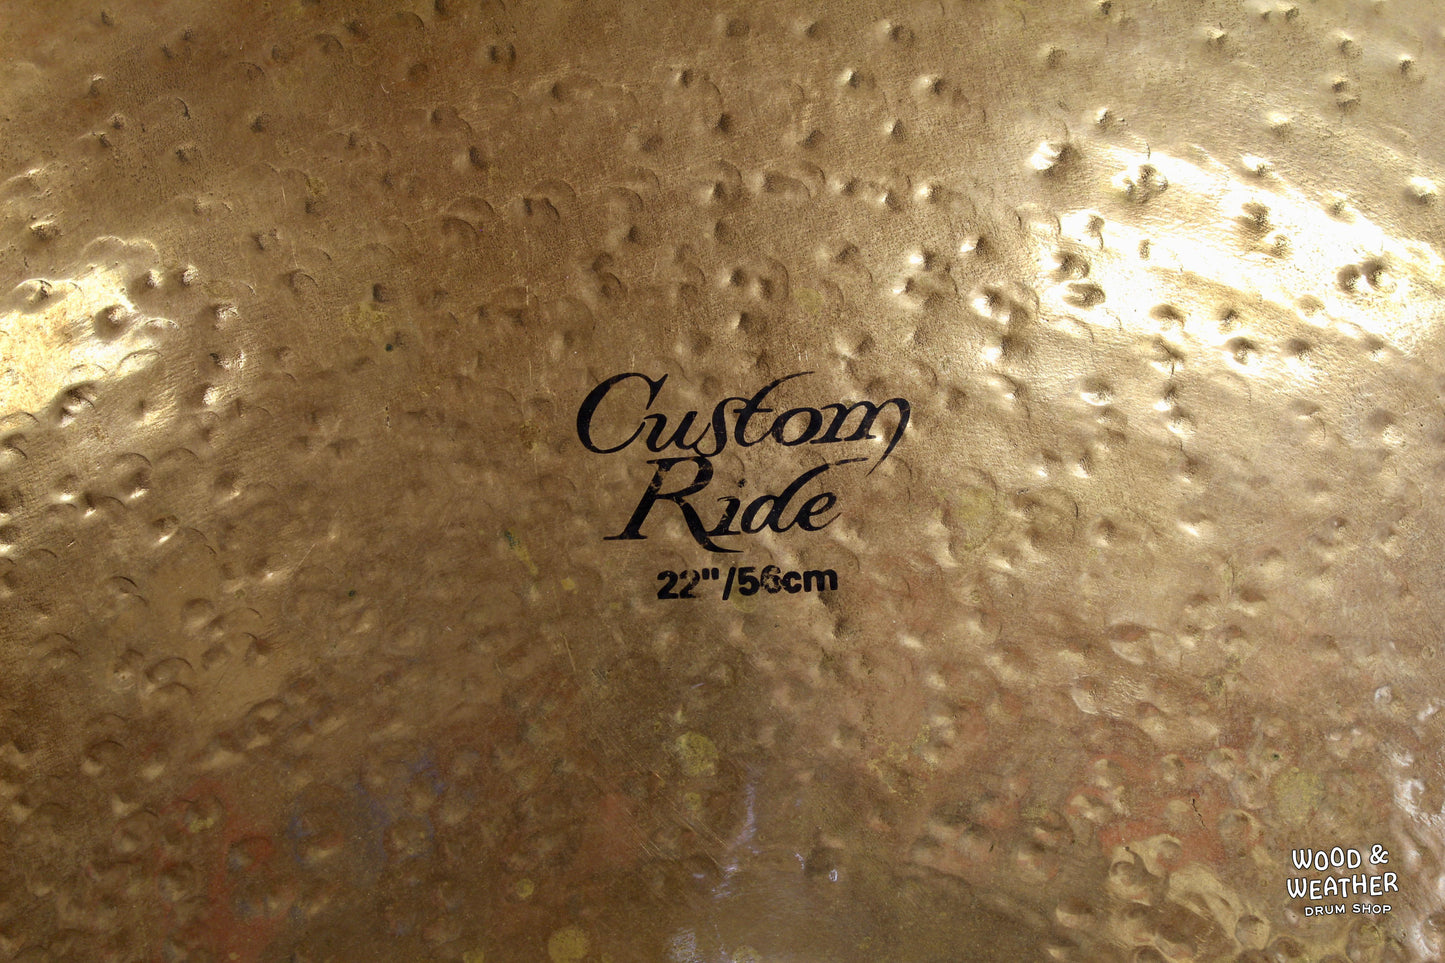 1994 Zildjian 22" K Custom Ride Cymbal 3447g